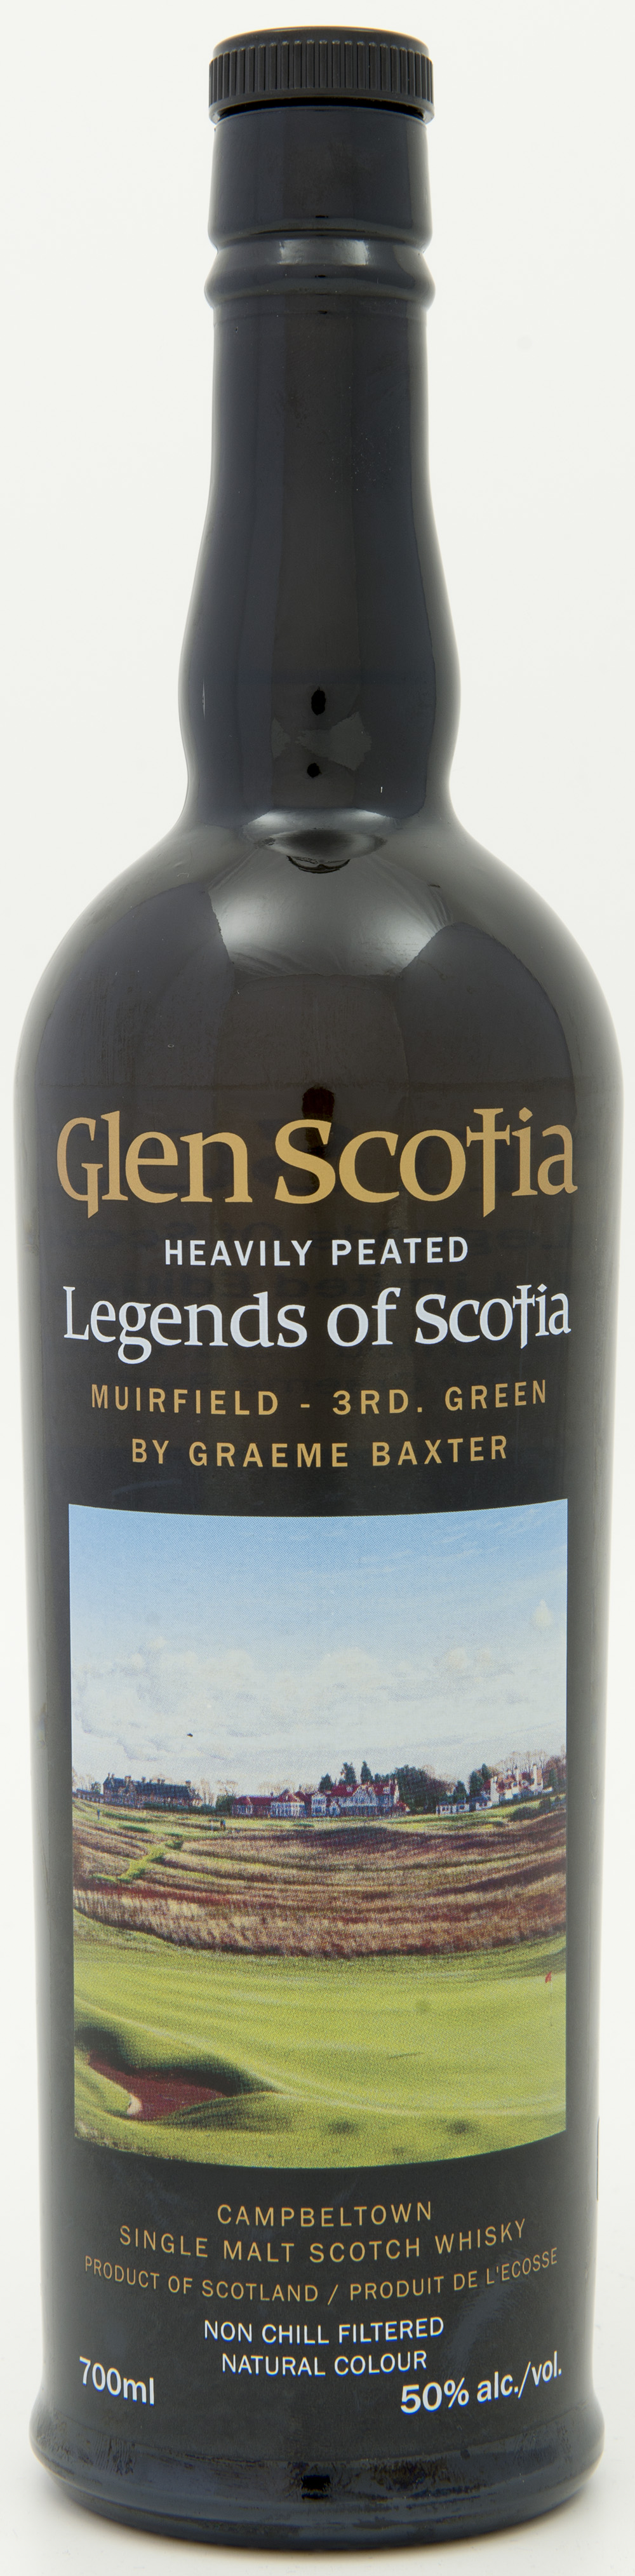 Billede: DSC_8220 - Glen Scotia - Heavily Peated - Legends of Scotia - bottle front.jpg